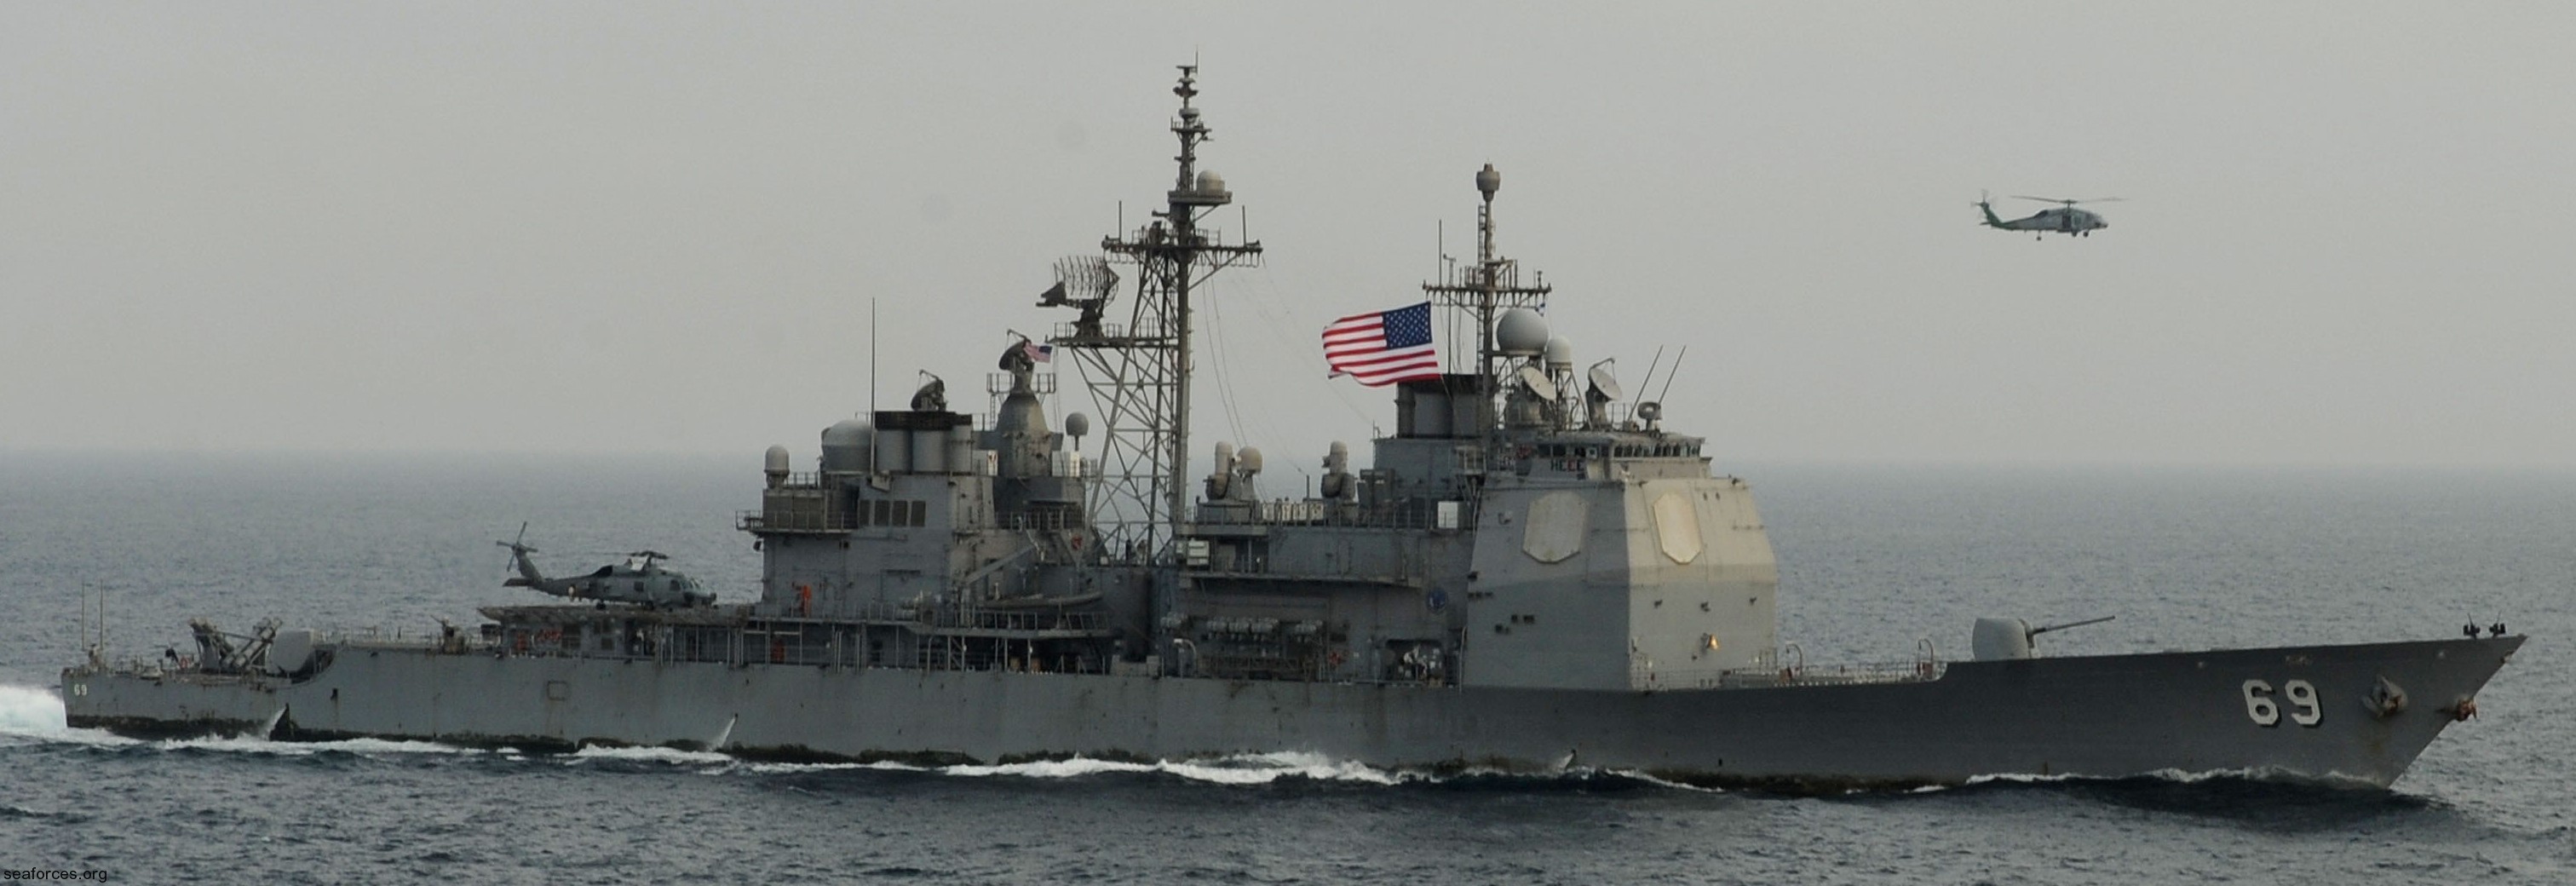 cg-69 uss vicksburg ticonderoga class guided missile cruiser us navy 17 arabian sea